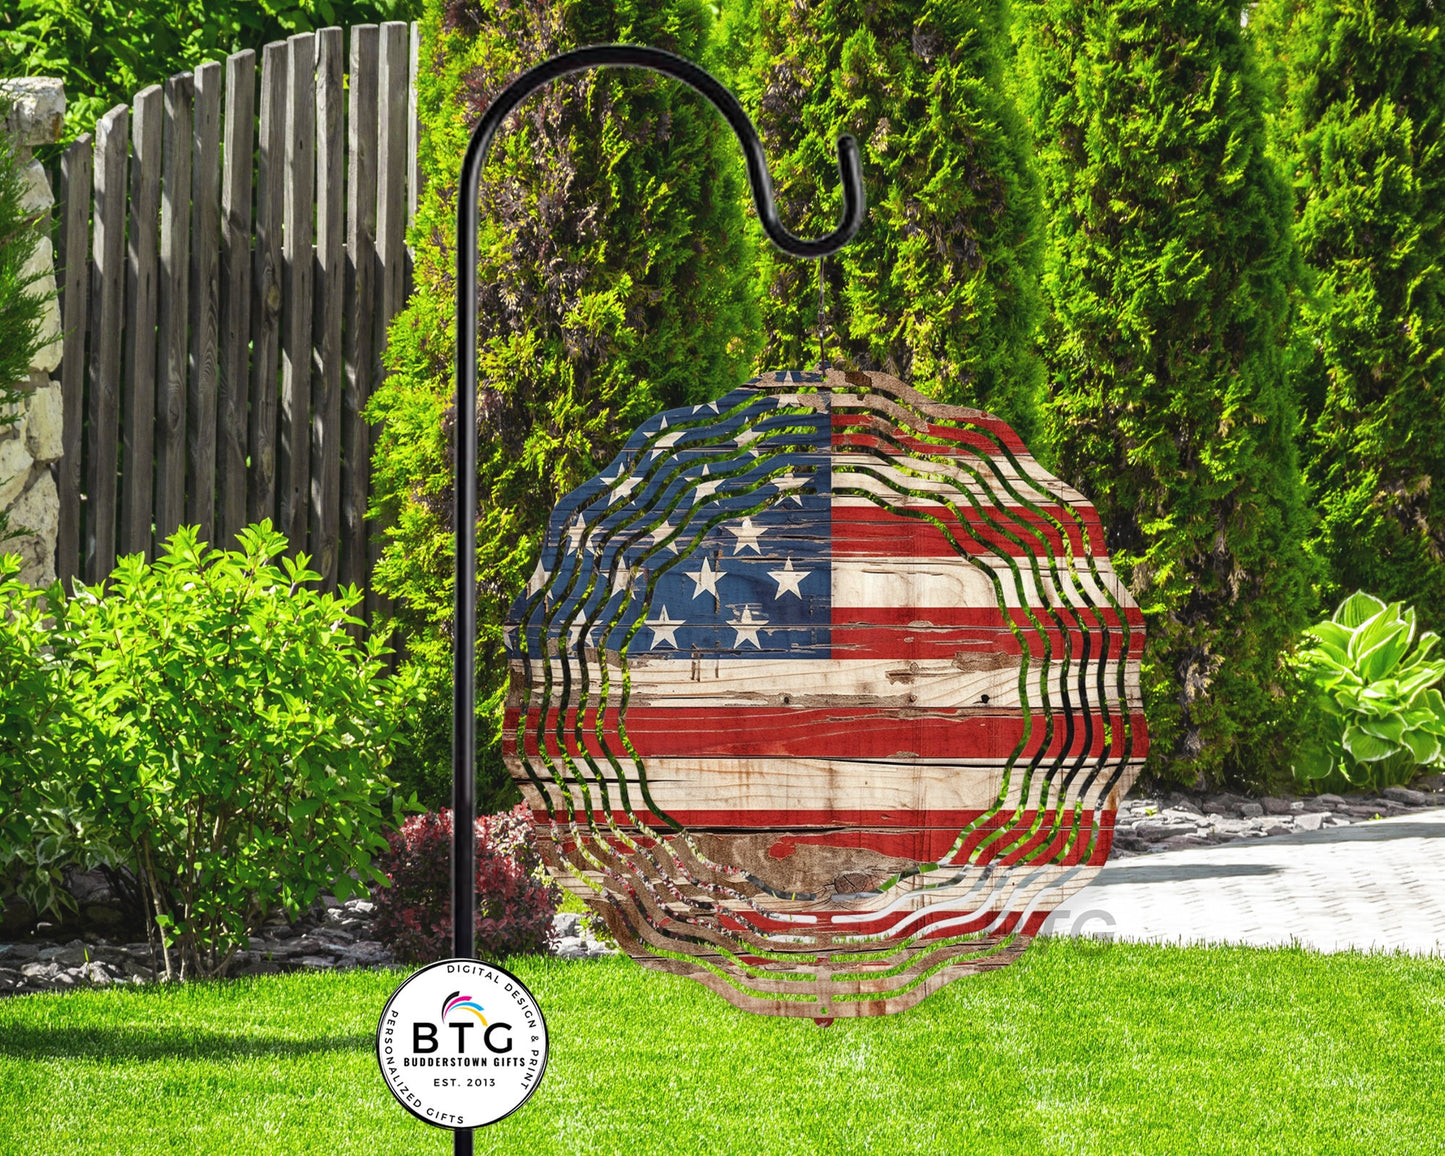 Patriotic Wind Spinner, American Flag, Patriotic Decor